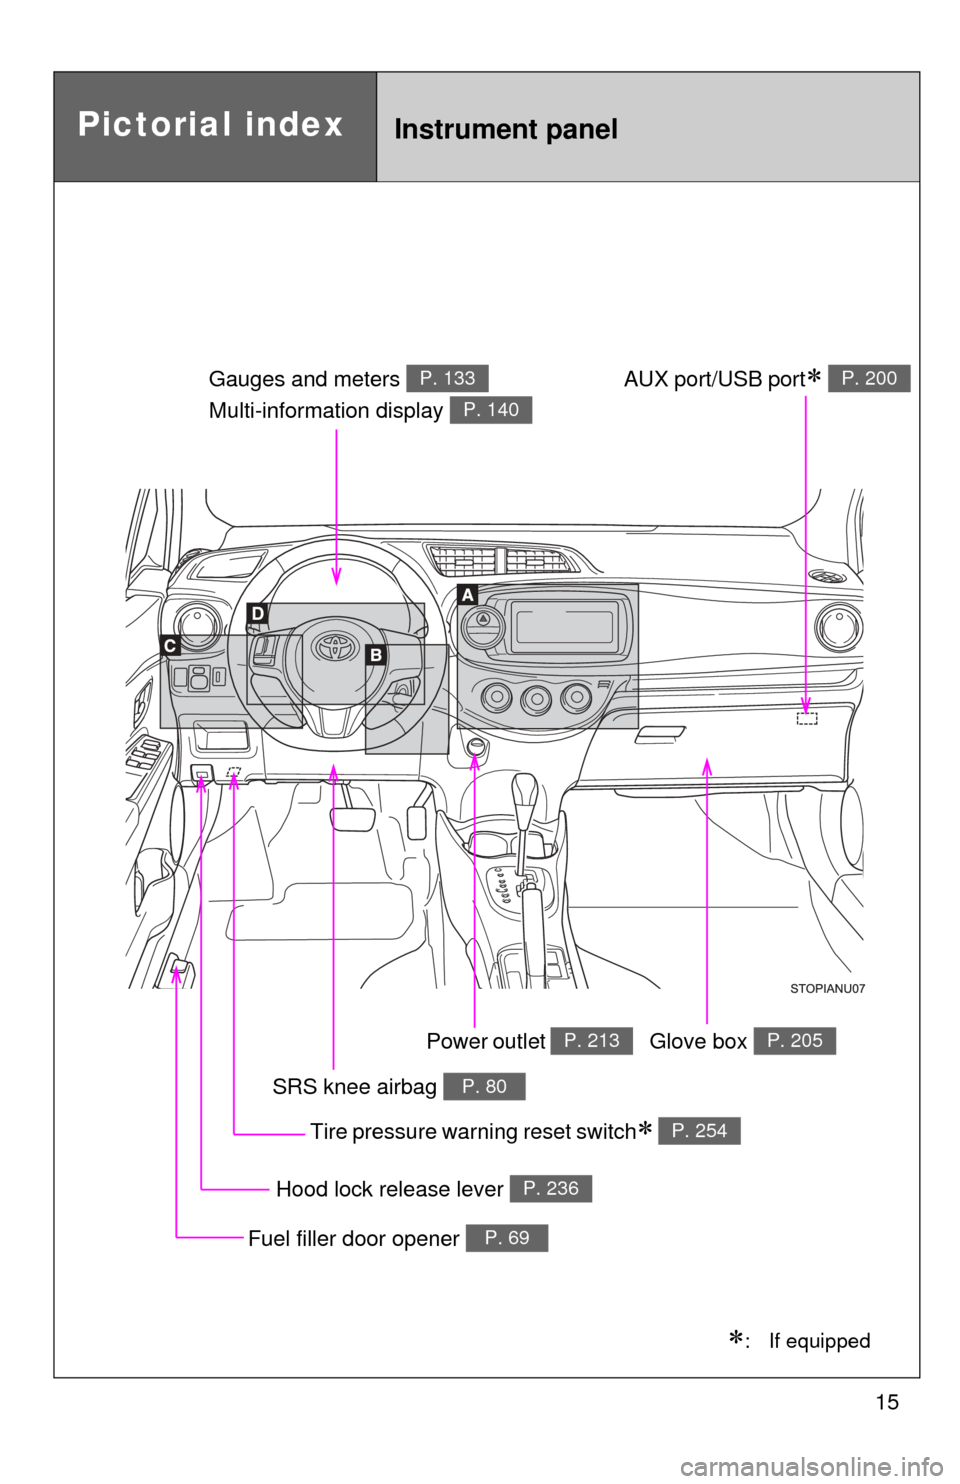 TOYOTA YARIS 2012 3.G User Guide 15
Pictorial indexInstrument panel
SRS knee airbag P. 80
Hood lock release lever P. 236
Gauges and meters 
Multi-information display P. 133
P. 140
Glove box P. 205
Fuel filler door opener P. 69
: I